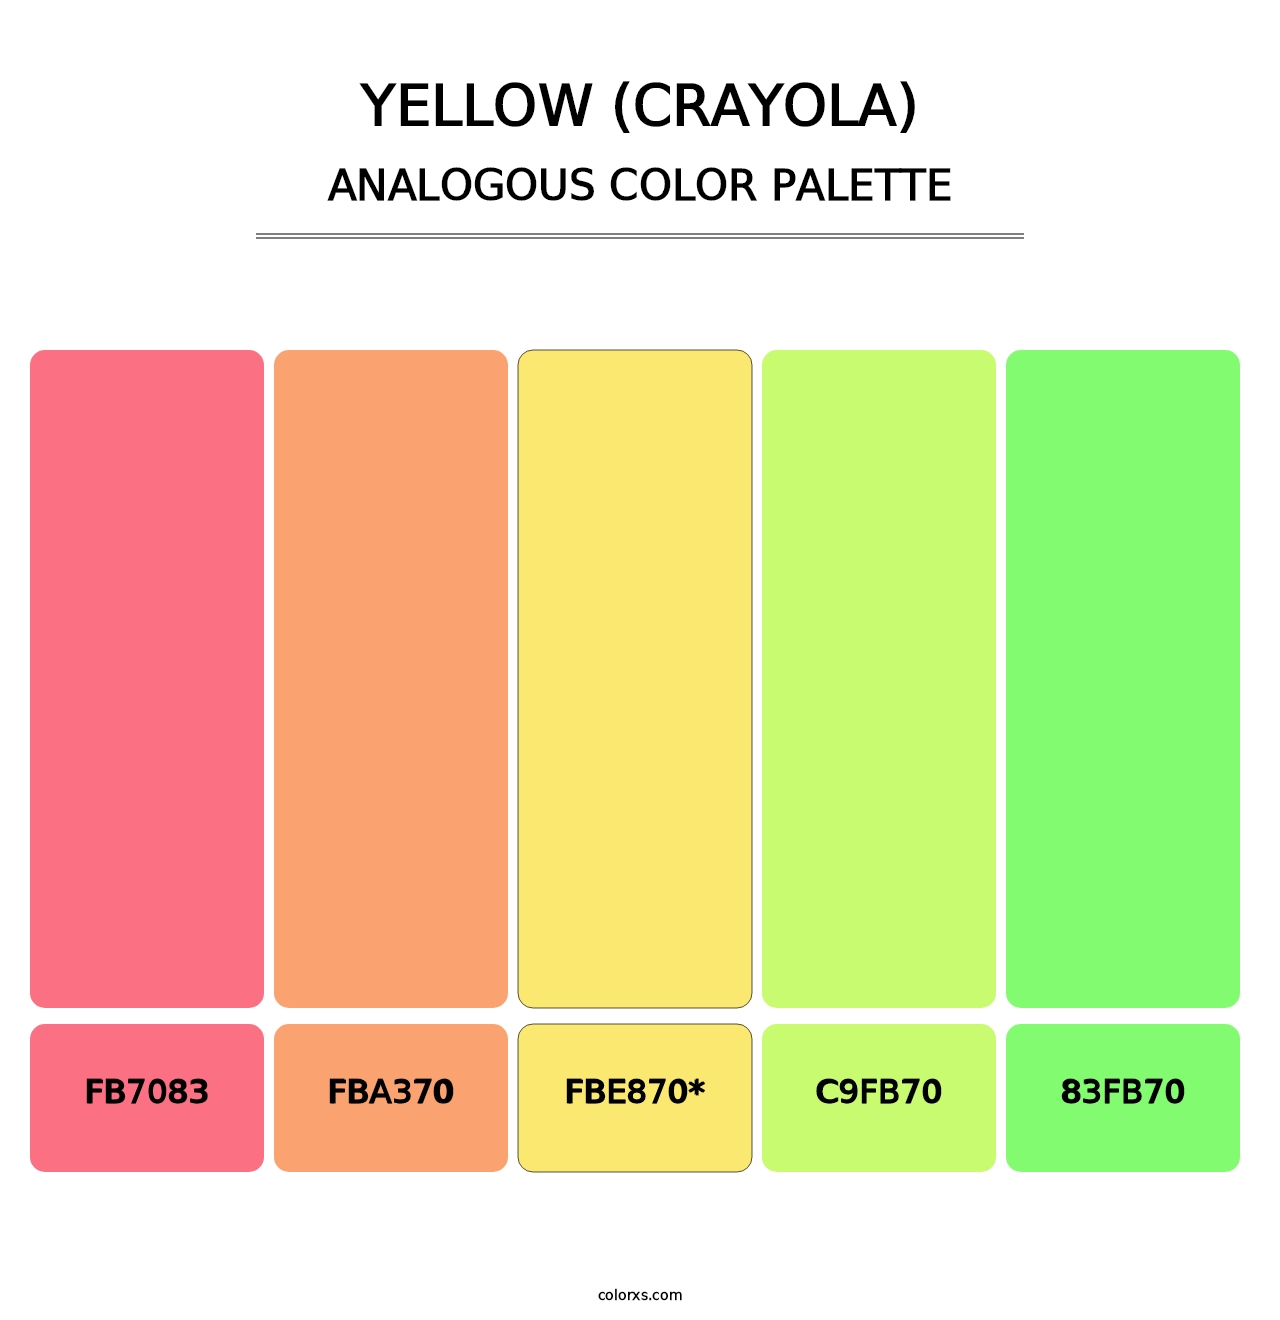 Yellow (Crayola) - Analogous Color Palette